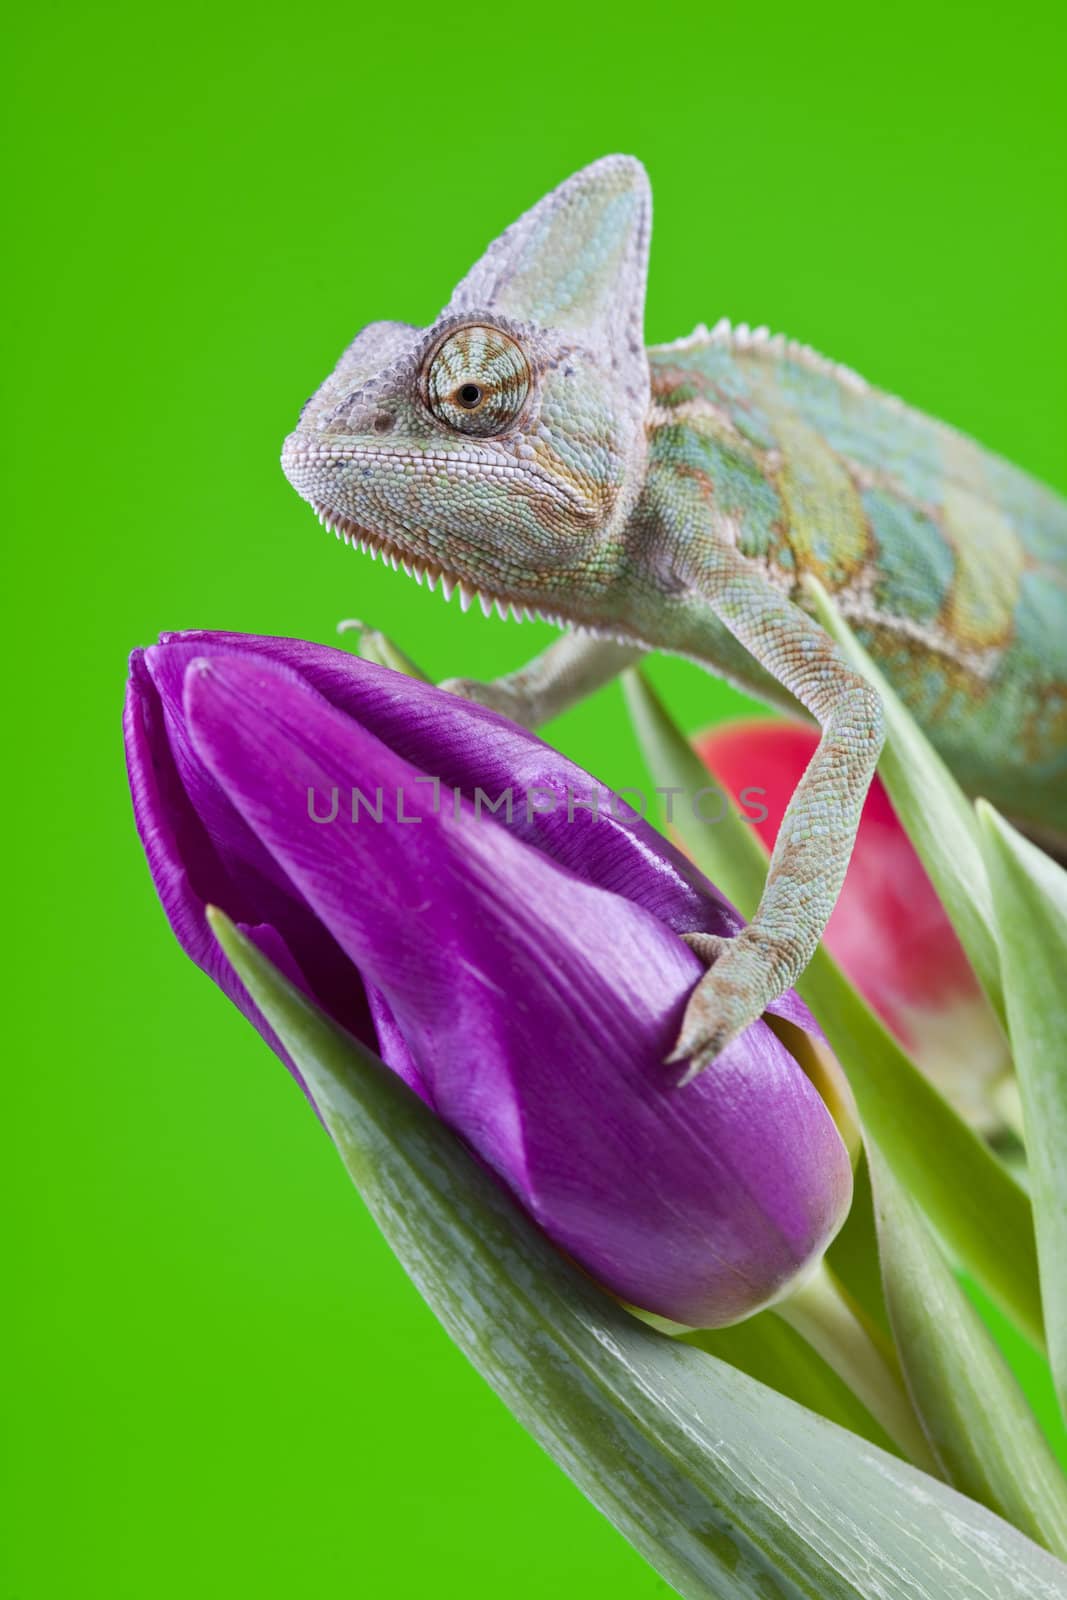 Beautiful big chameleon sitting on a tulip